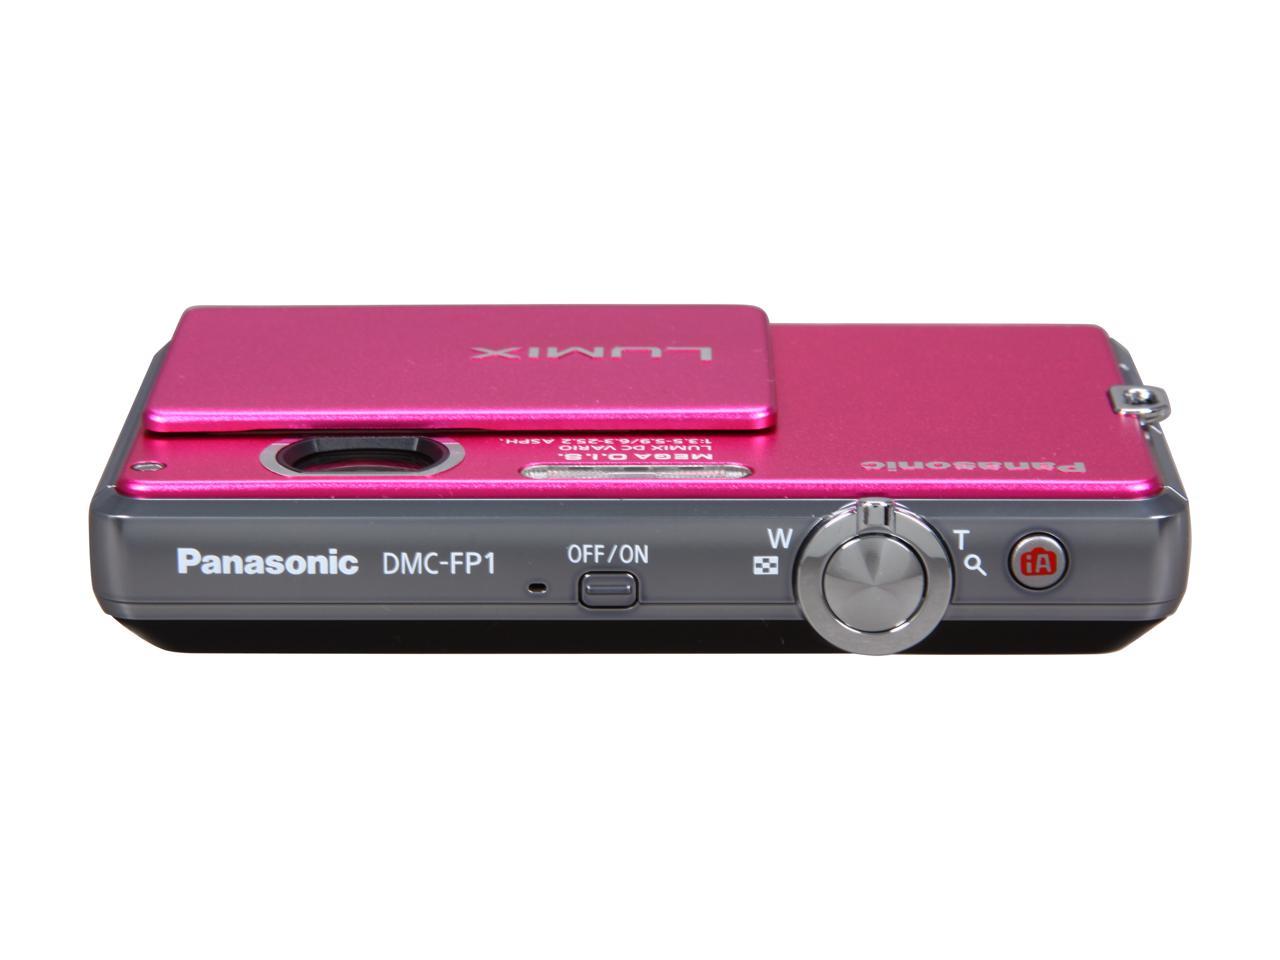 gek geworden dennenboom Buitenlander Panasonic LUMIX DMC-FP1 Pink 12.1 MP Digital Camera - Newegg.com